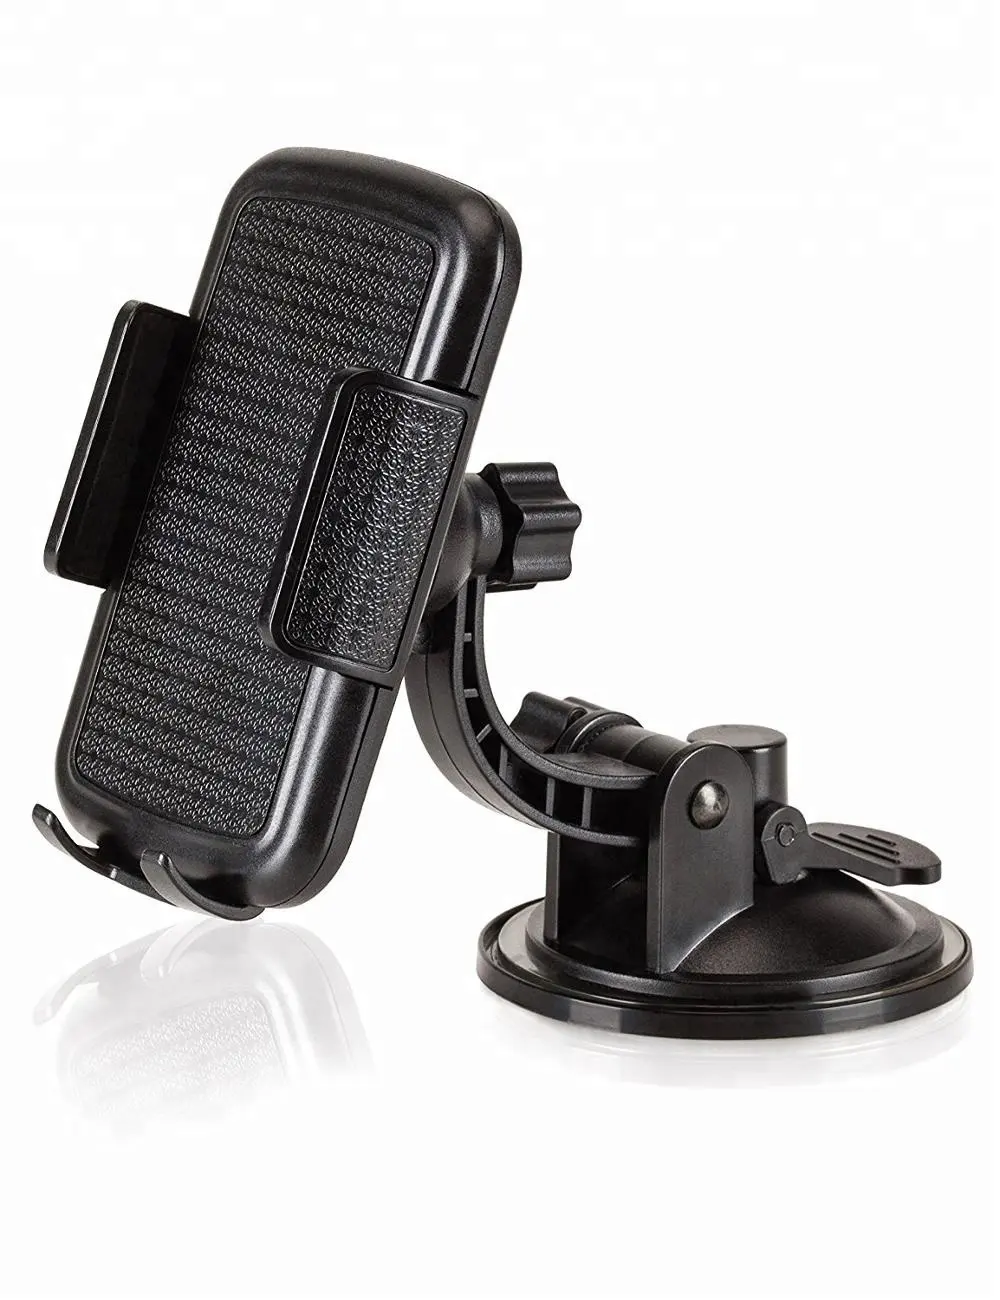 Starsky dashboard cell phone car mount holder, smartphone car mount, phone holder for any brand phone